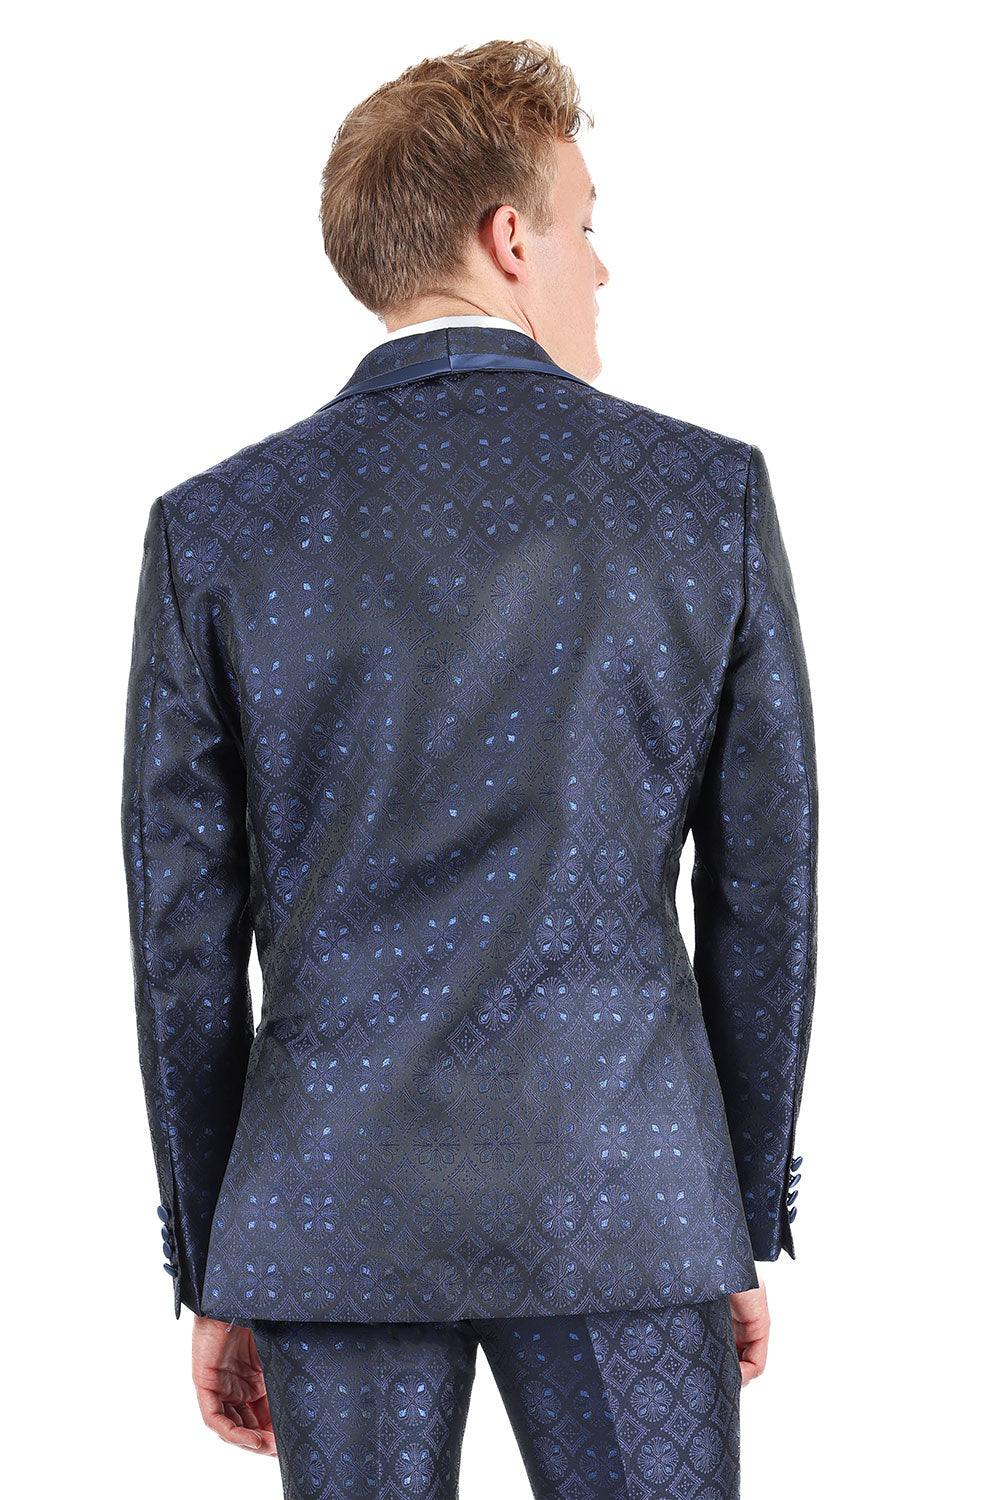 BARABAS Men's Premium Geometric Shawl Blazer 3BL05 Blue